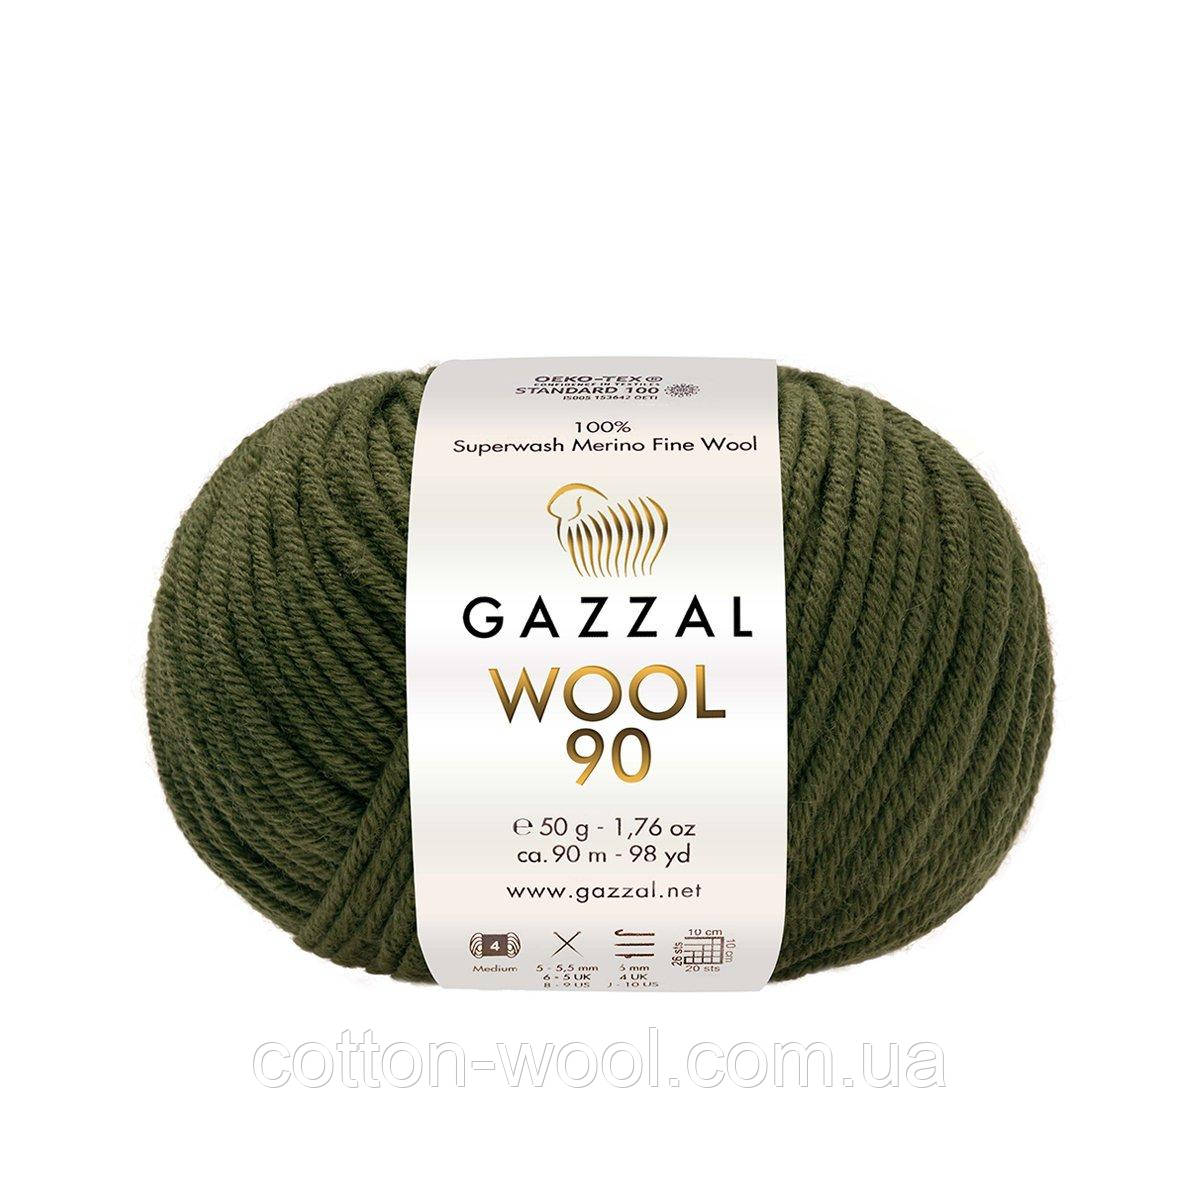 Gazzal Wool 90 (Газзал Вул 90) 3672